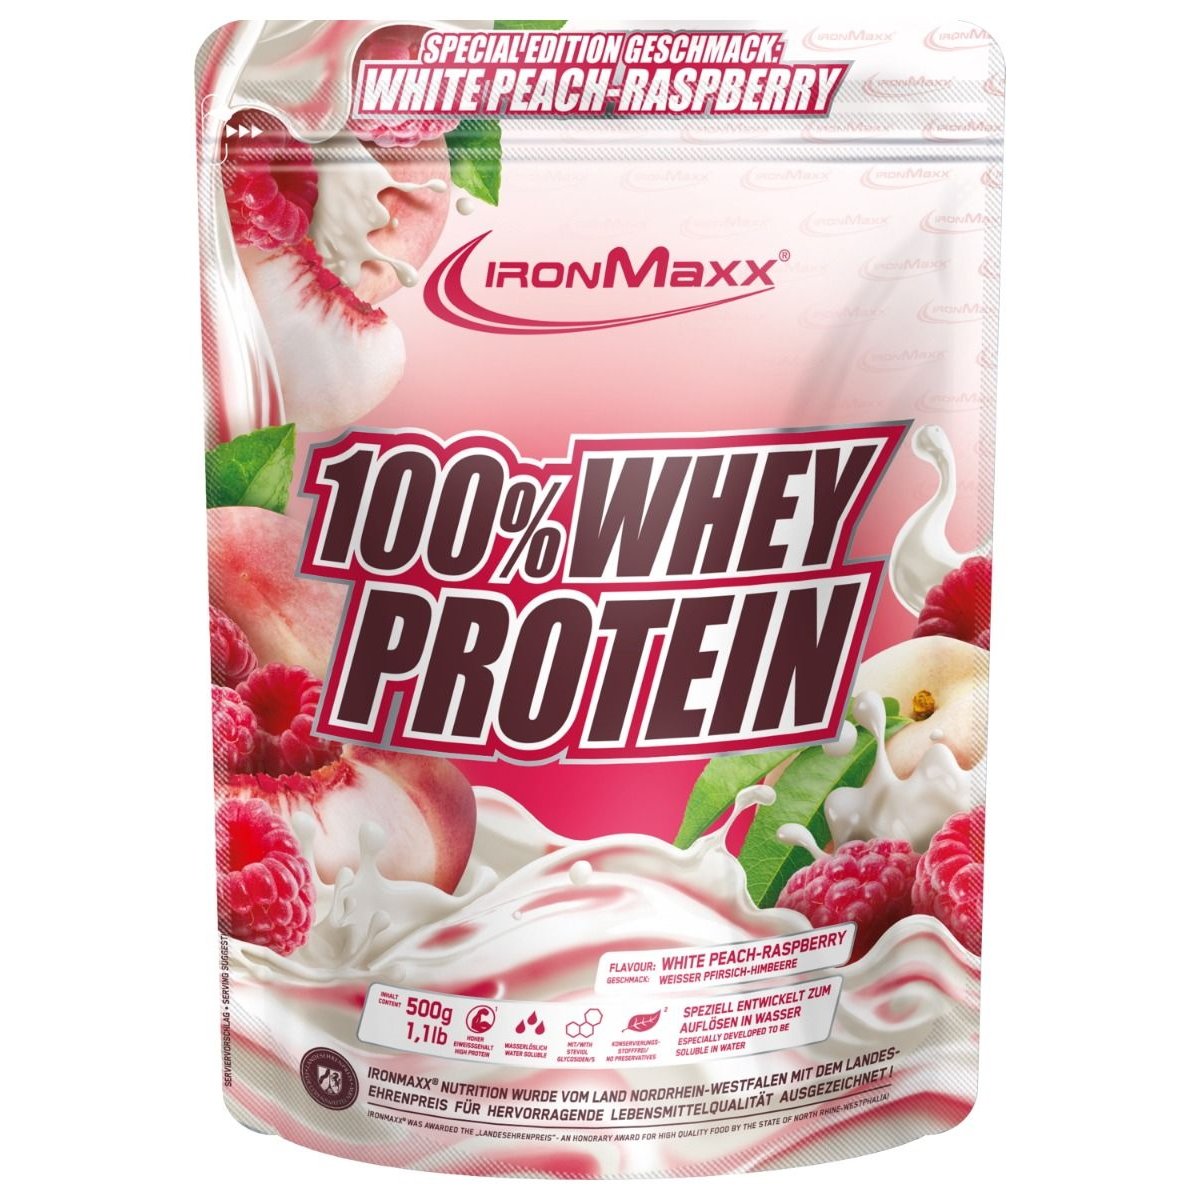 Протеин Ironmaxx 100% Whey Protein, 500 грамм Белый персик-малина,  ml, IronMaxx. Protein. Mass Gain स्वास्थ्य लाभ Anti-catabolic properties 